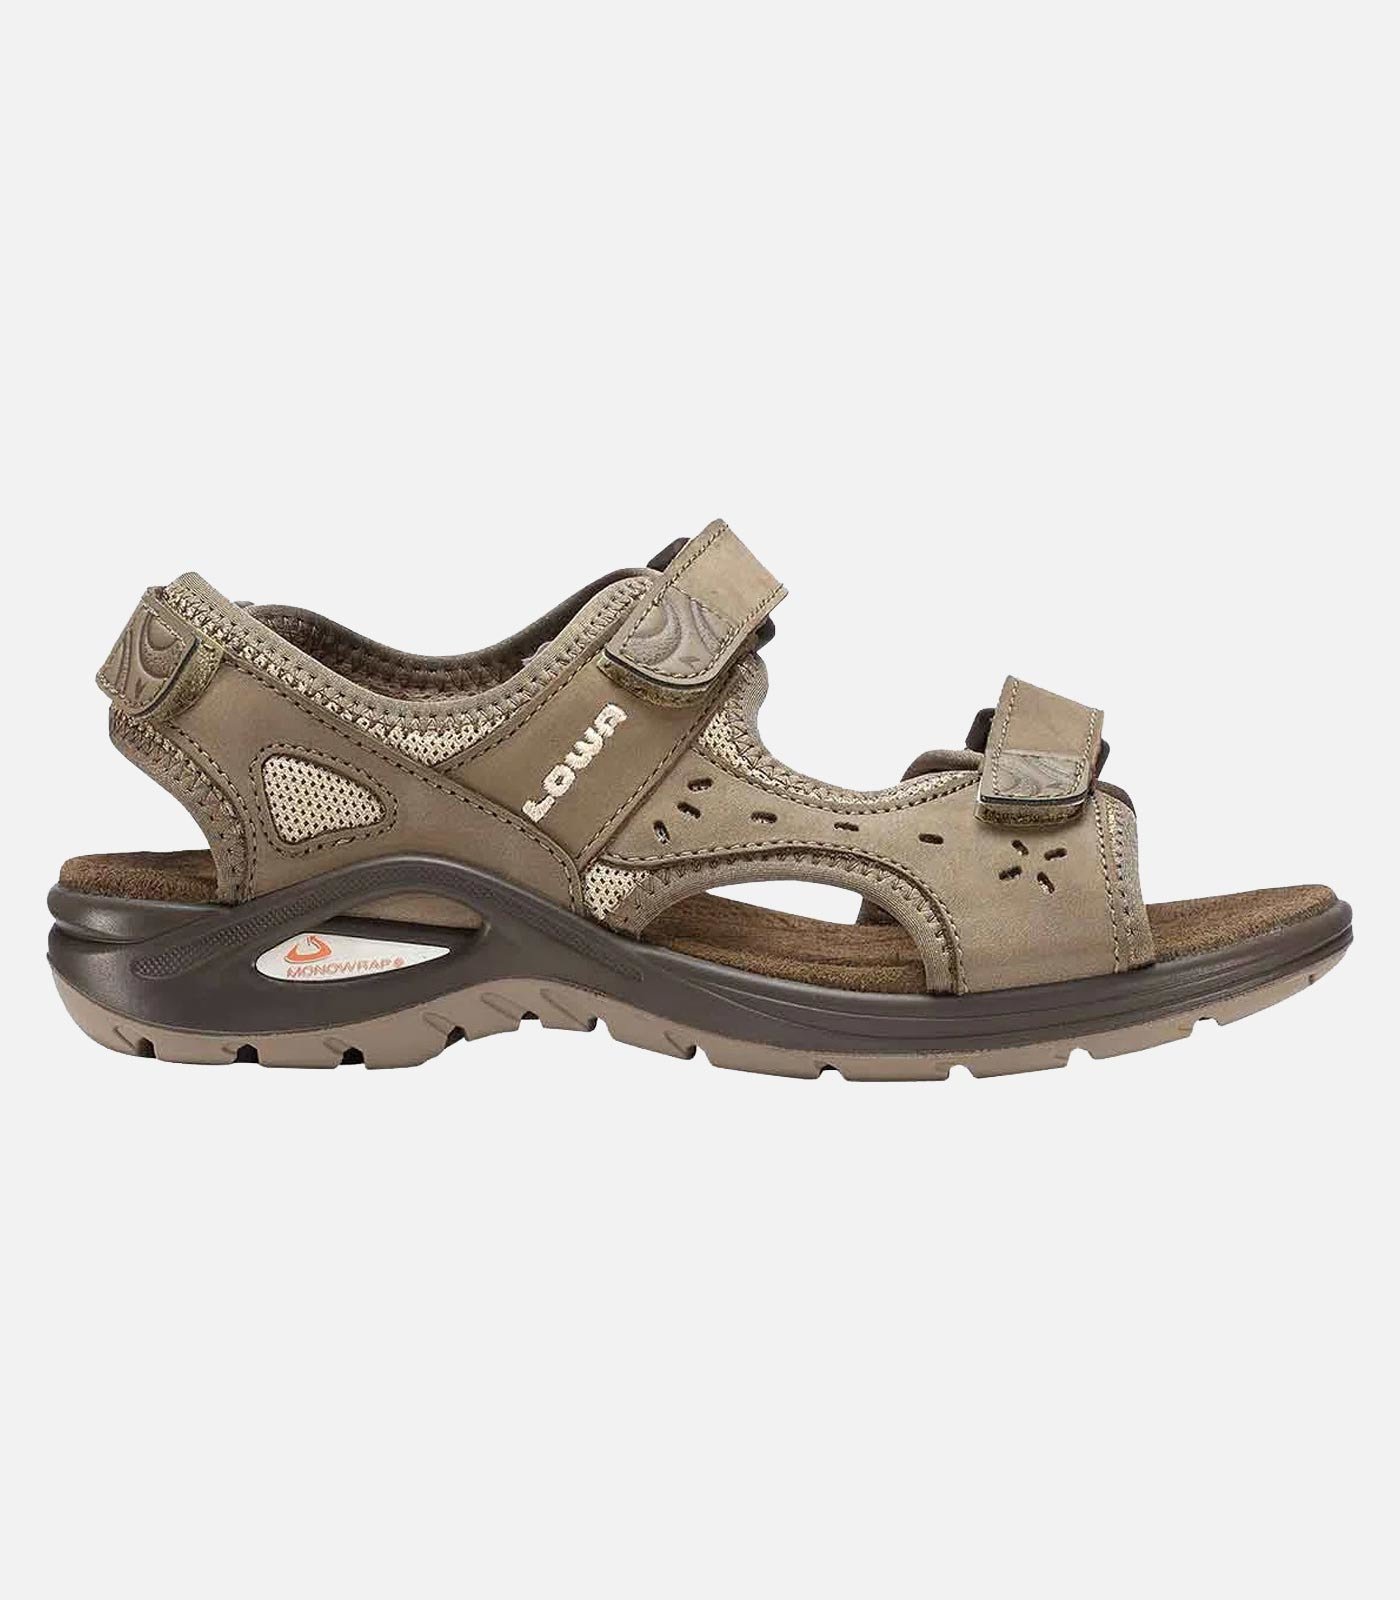 Keen Brown Outdoor Hiking Sandals Men's US Size 8.5 Bungee Lace Waterproof  | Mens sandals, Hiking sandals, Outdoor hiking